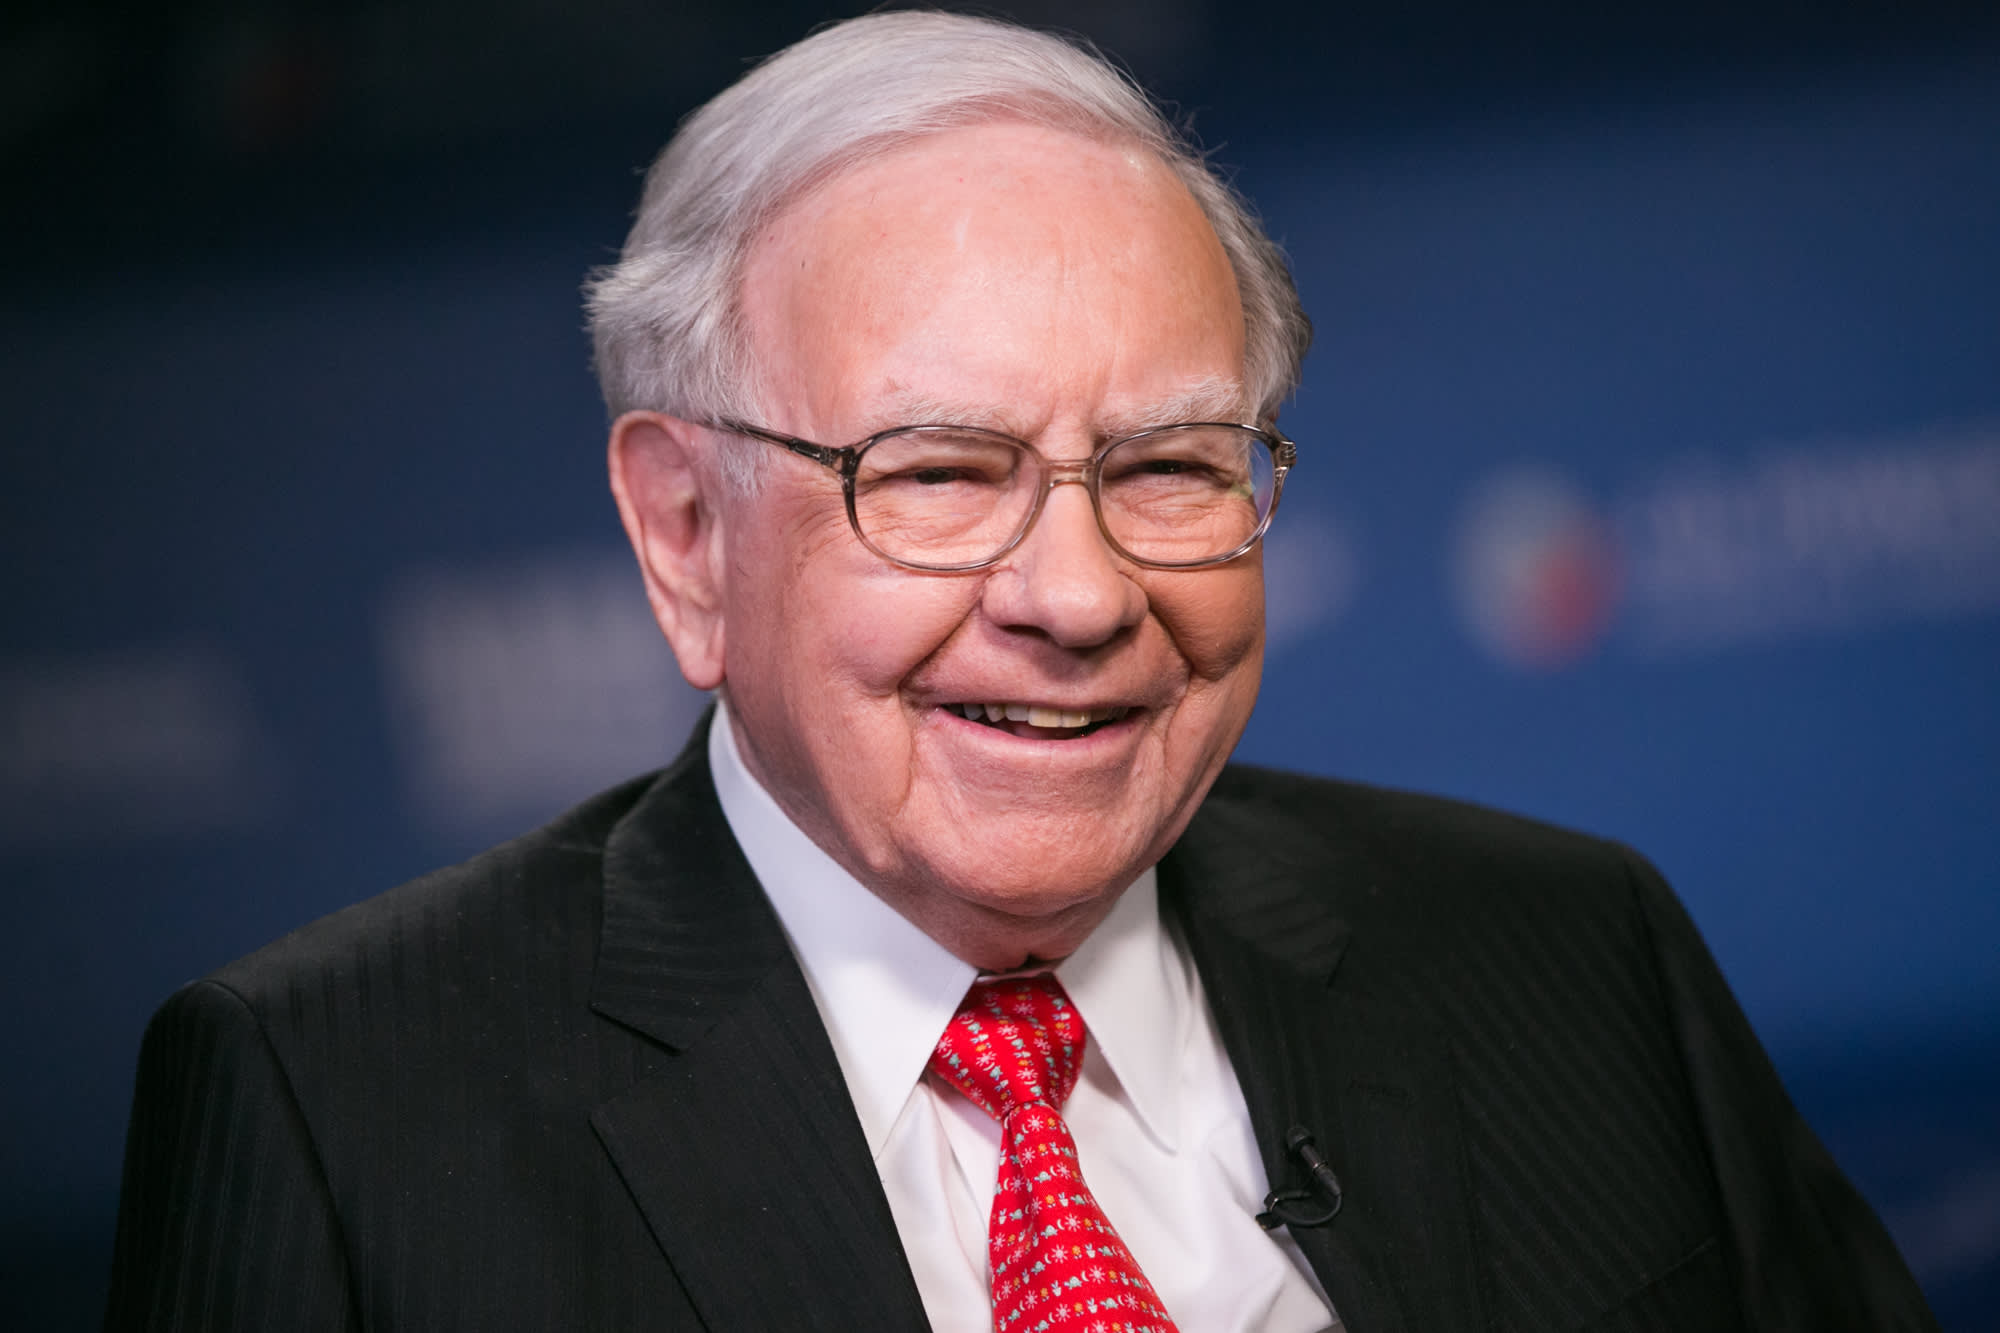 Warren Buffet's key to success is a diversification
source https://www.cnbc.com/2018/03/27/warren-buffetts-key-tip-for-success-read-500-pages-a-day.html